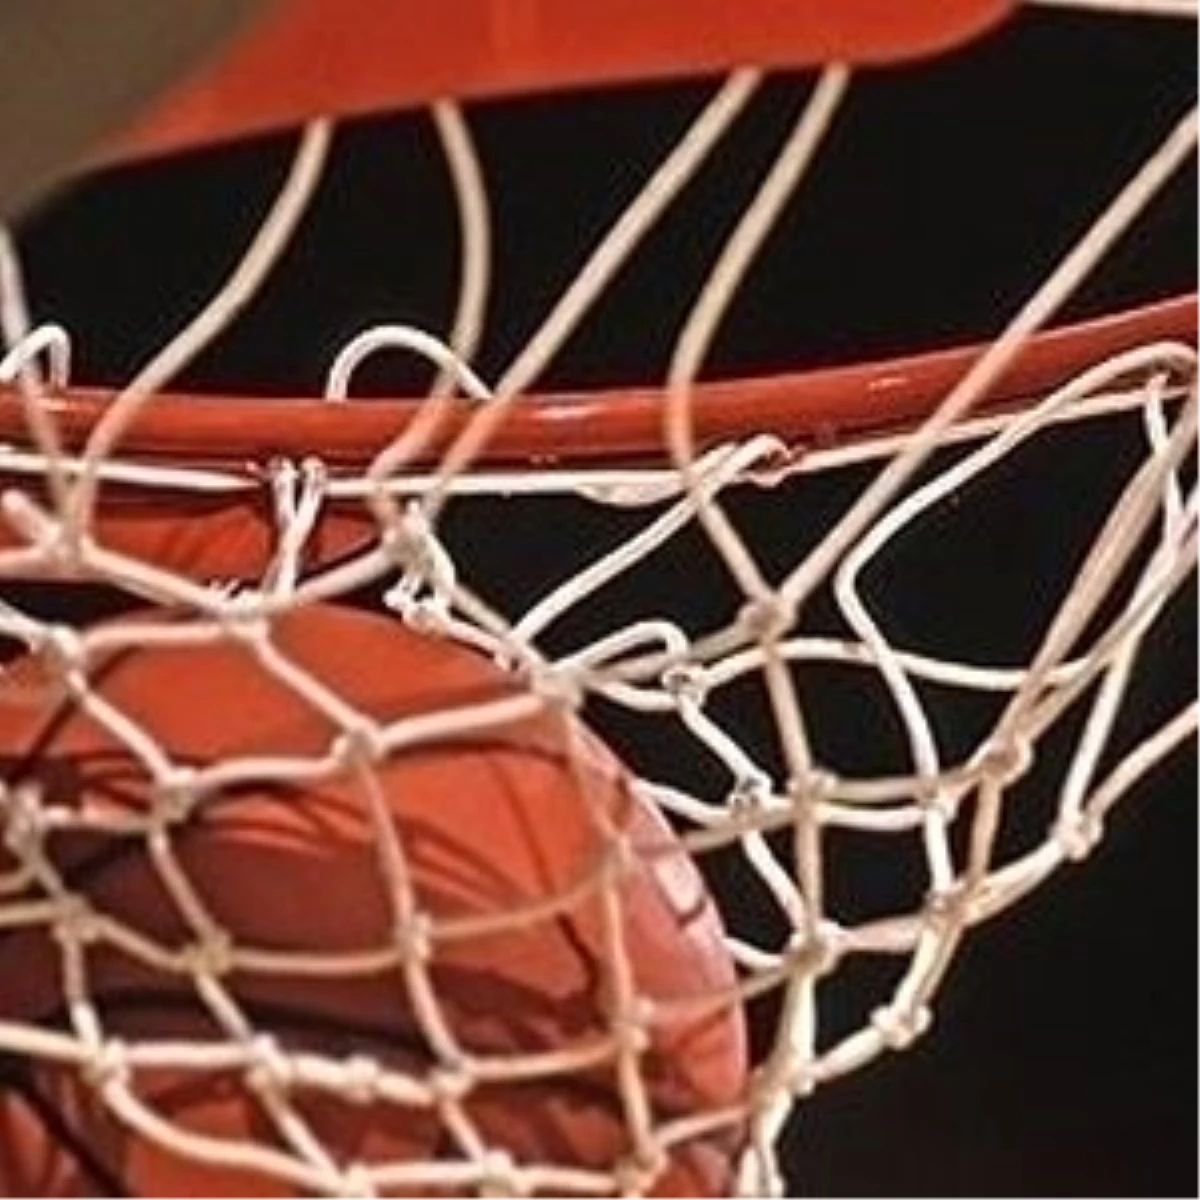 Beko Basketbol Ligi Play-off Final Serisi